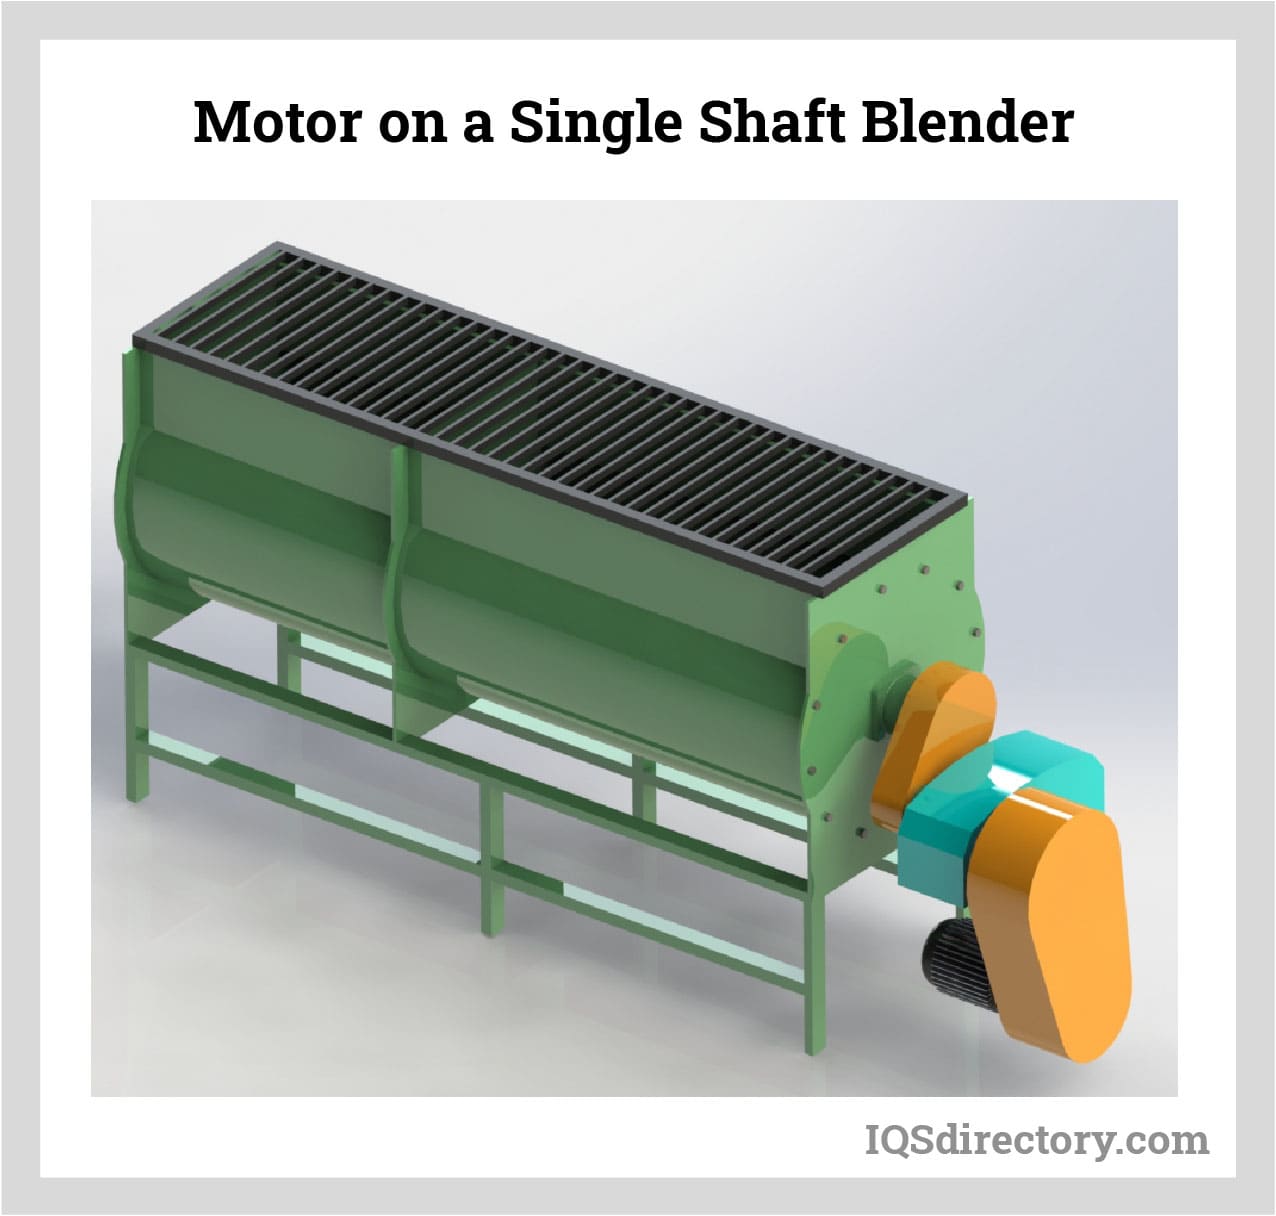 Motor on a Single Shaft Blender